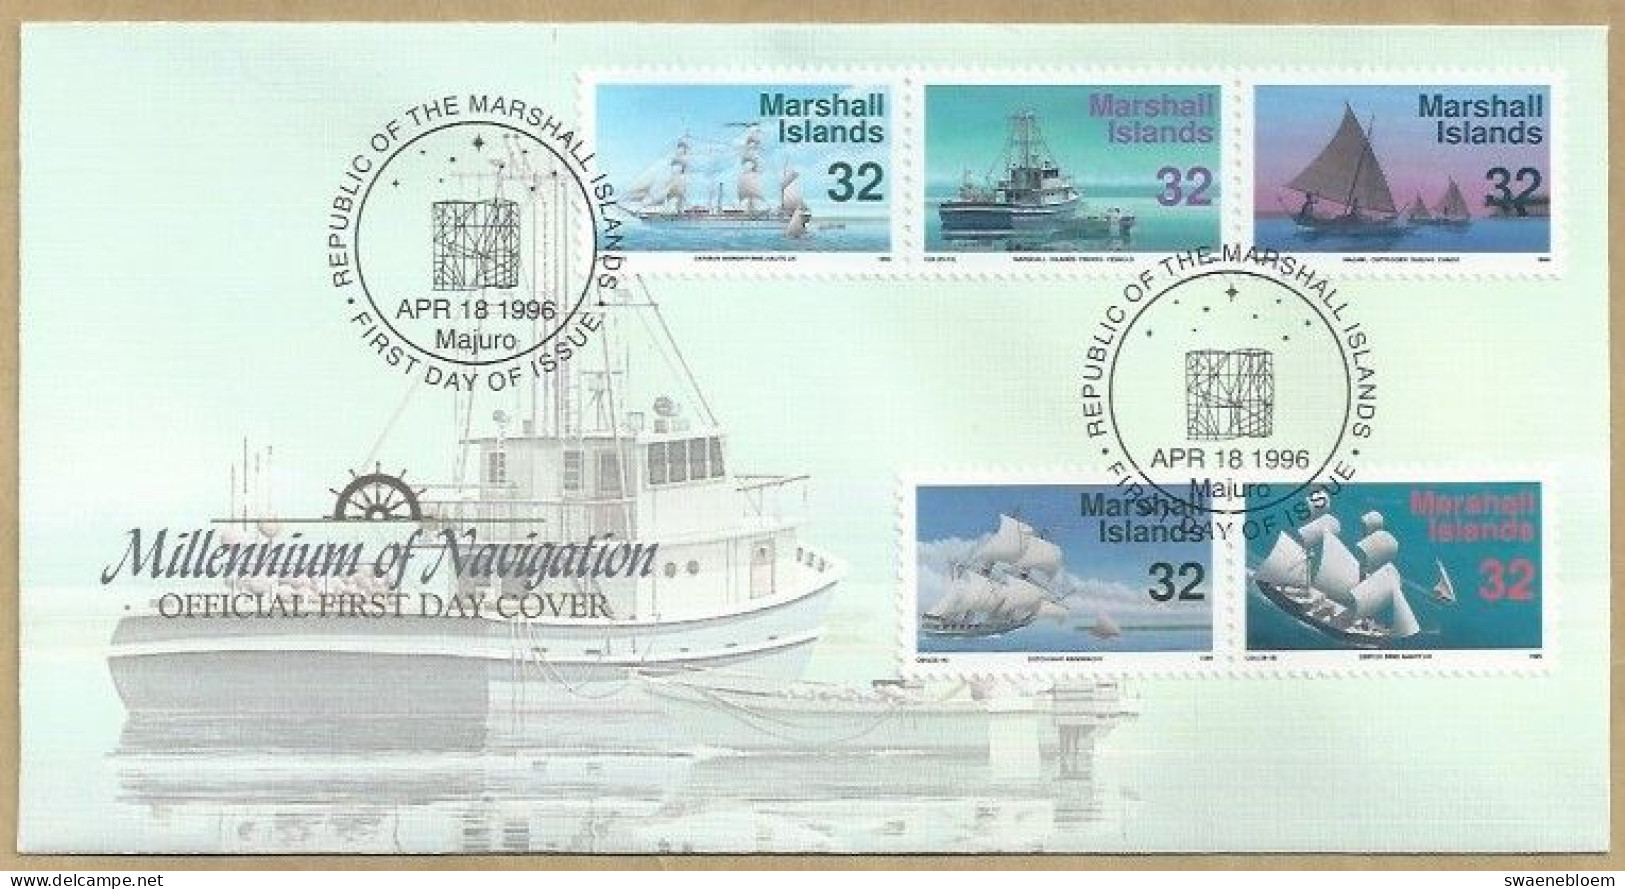 FDC. REPUBLIC OF THE MARSHALL ISLANDS. APR 18 1996 MAJURO. MILLENNIUM OF NAVIGATION. C94.FDC. (3). - Marshallinseln